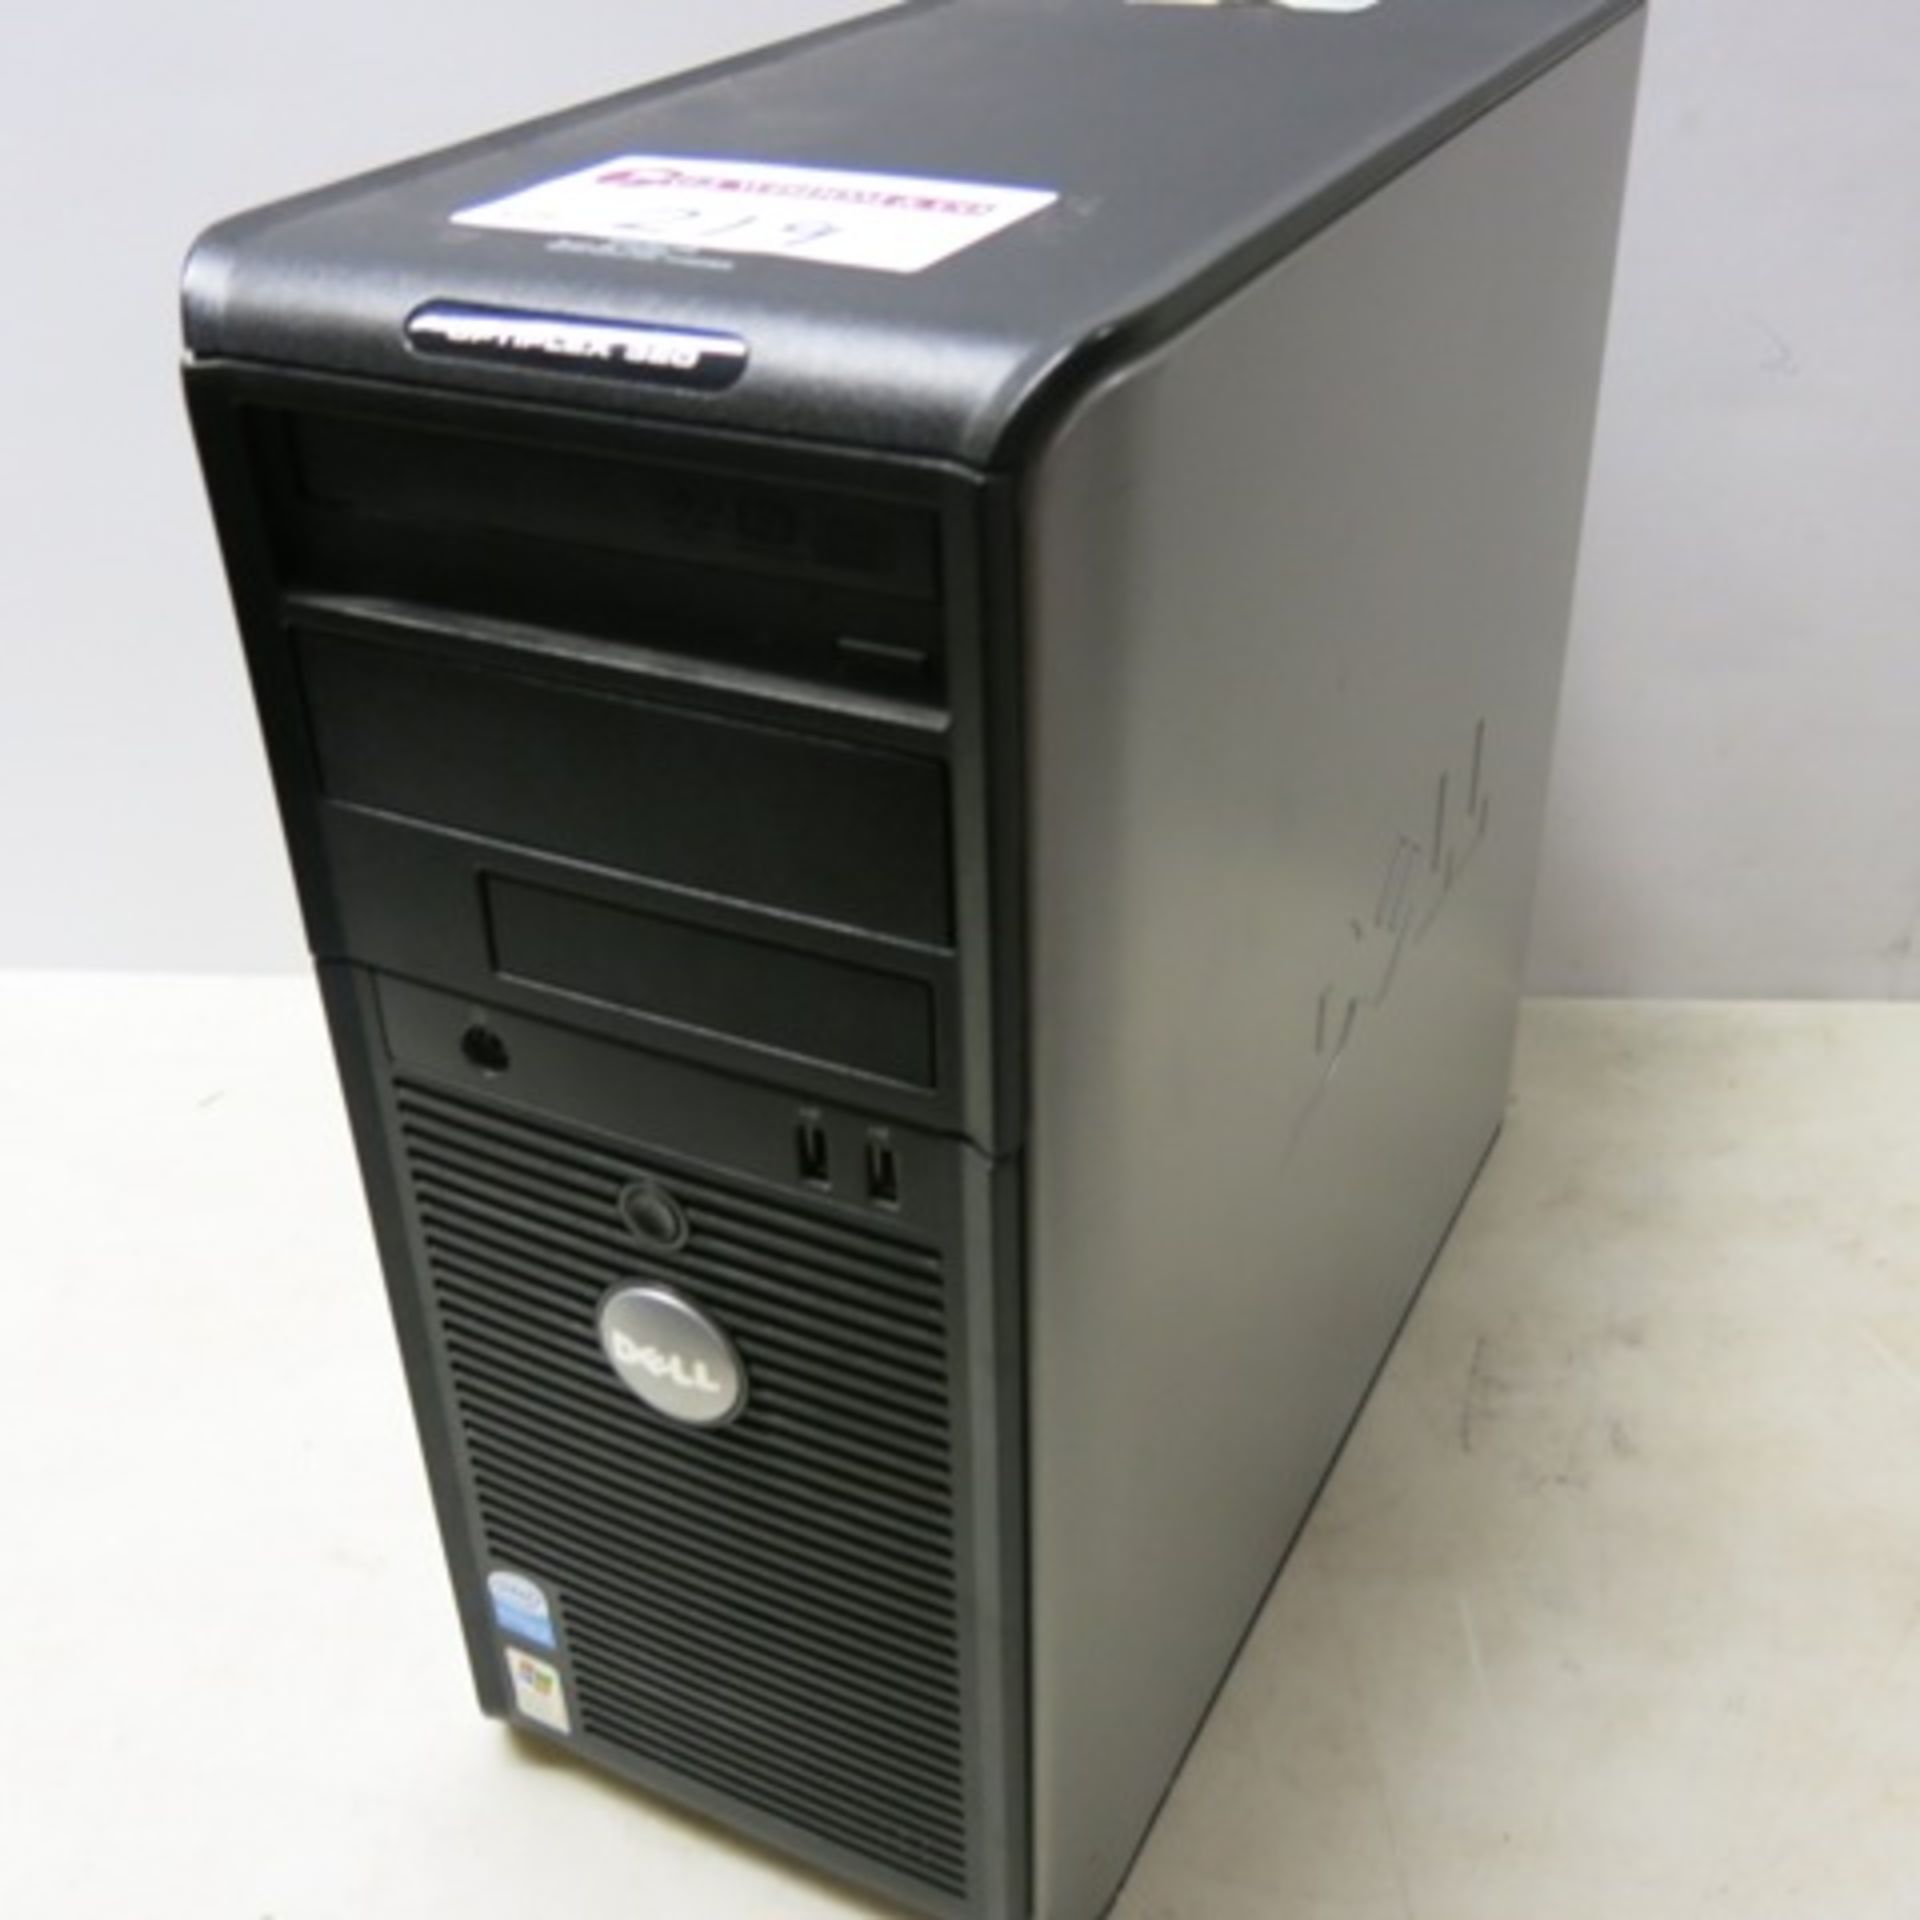 Dell OptiPlex 320 PC. Intel Pentium D CPU @ 3GHz, 1GB RAM, 156GB HDD. Running Ubuntu Linux 14.04